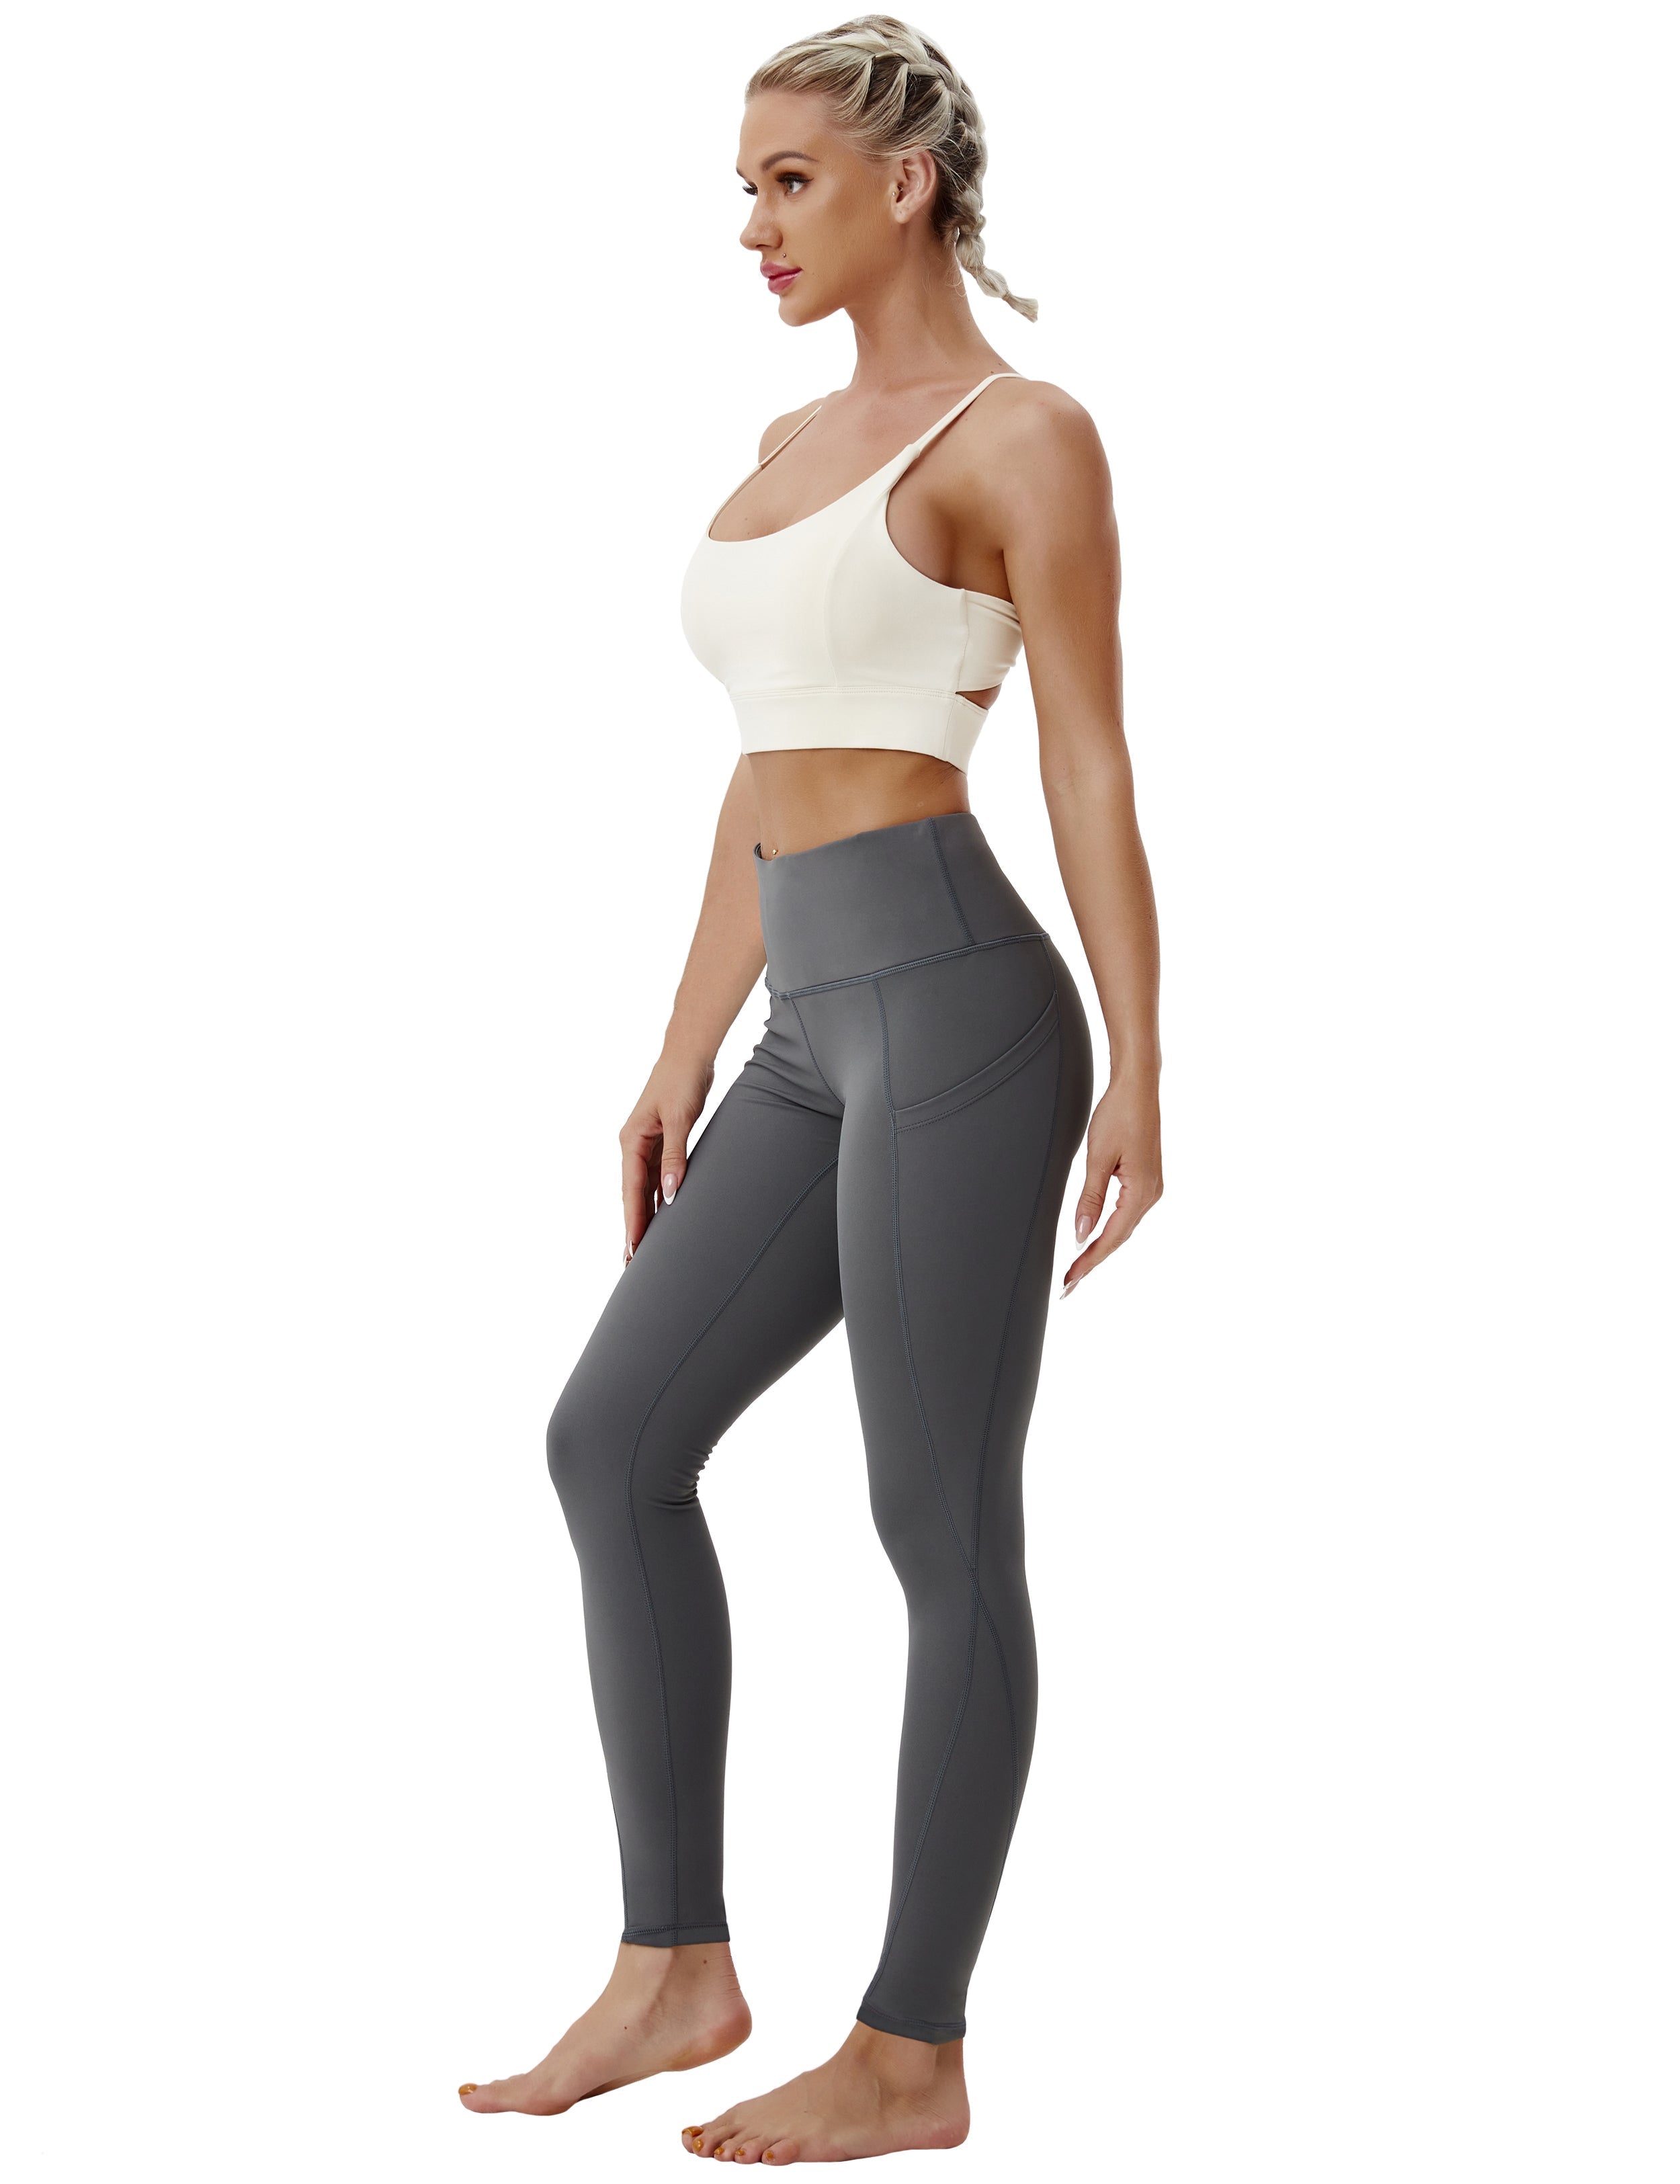 BUBBLELIME 29313335 4 Styles Womens High Waist Bootcut Yoga Pants - Side  Pockets_ARABEScATO XS-29 Inseam 